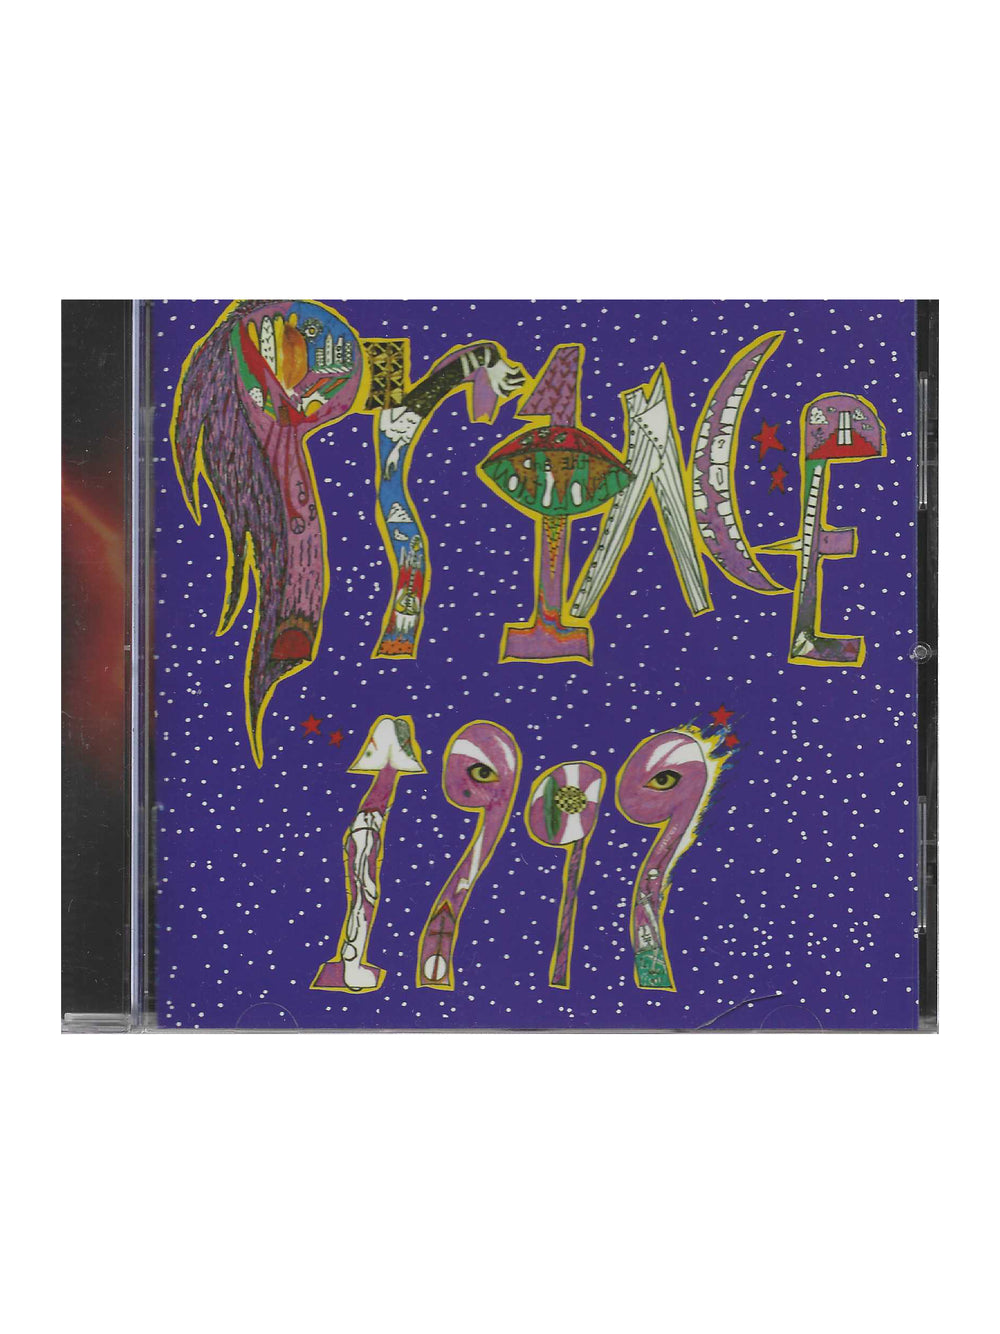 Prince – & The Revolution - 1999 CD Album Reissue Sony Legacy NPG Records NEW 2022